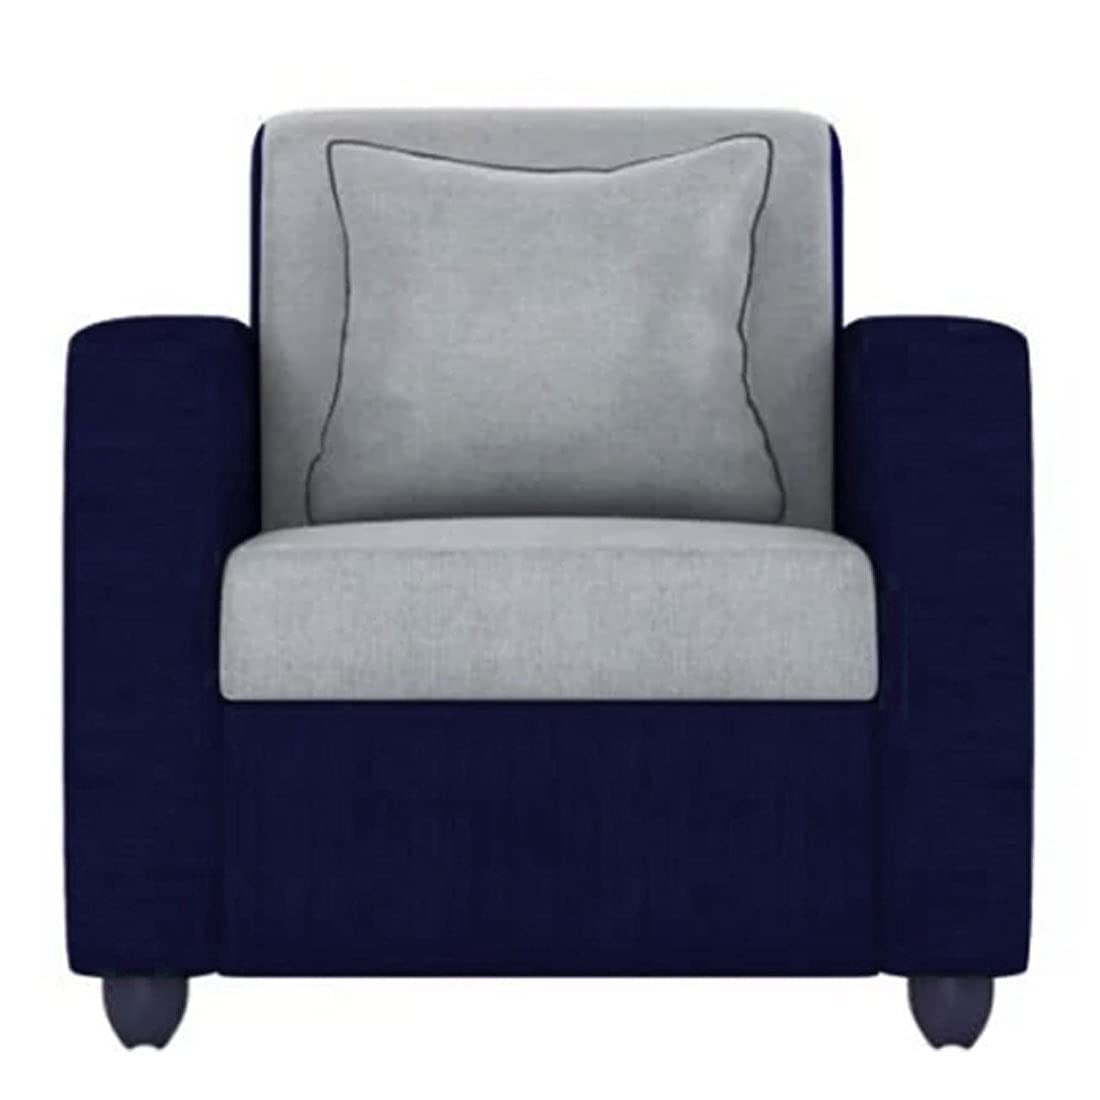 5 Seater Sofa Set: 3+1+1 Fabric Sofa Set (Light Grey-Dark Blue)